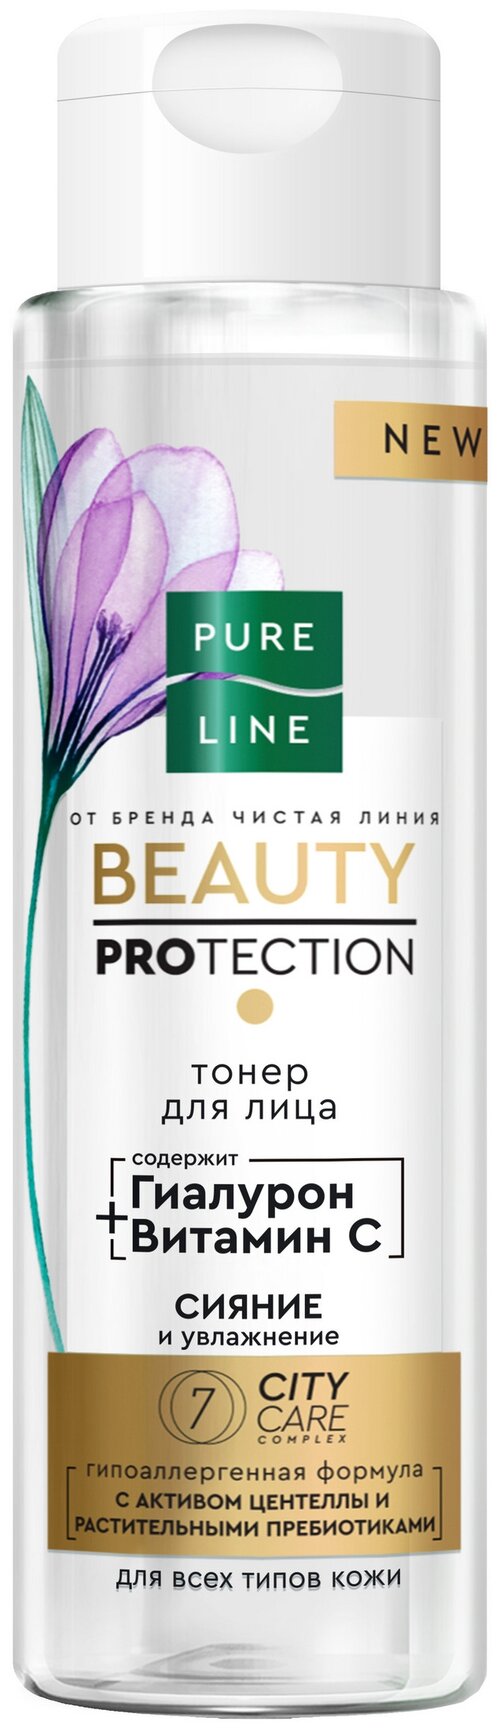 Чистая линия Тонер для лица Pure Line Beauty Protection, 190 мл